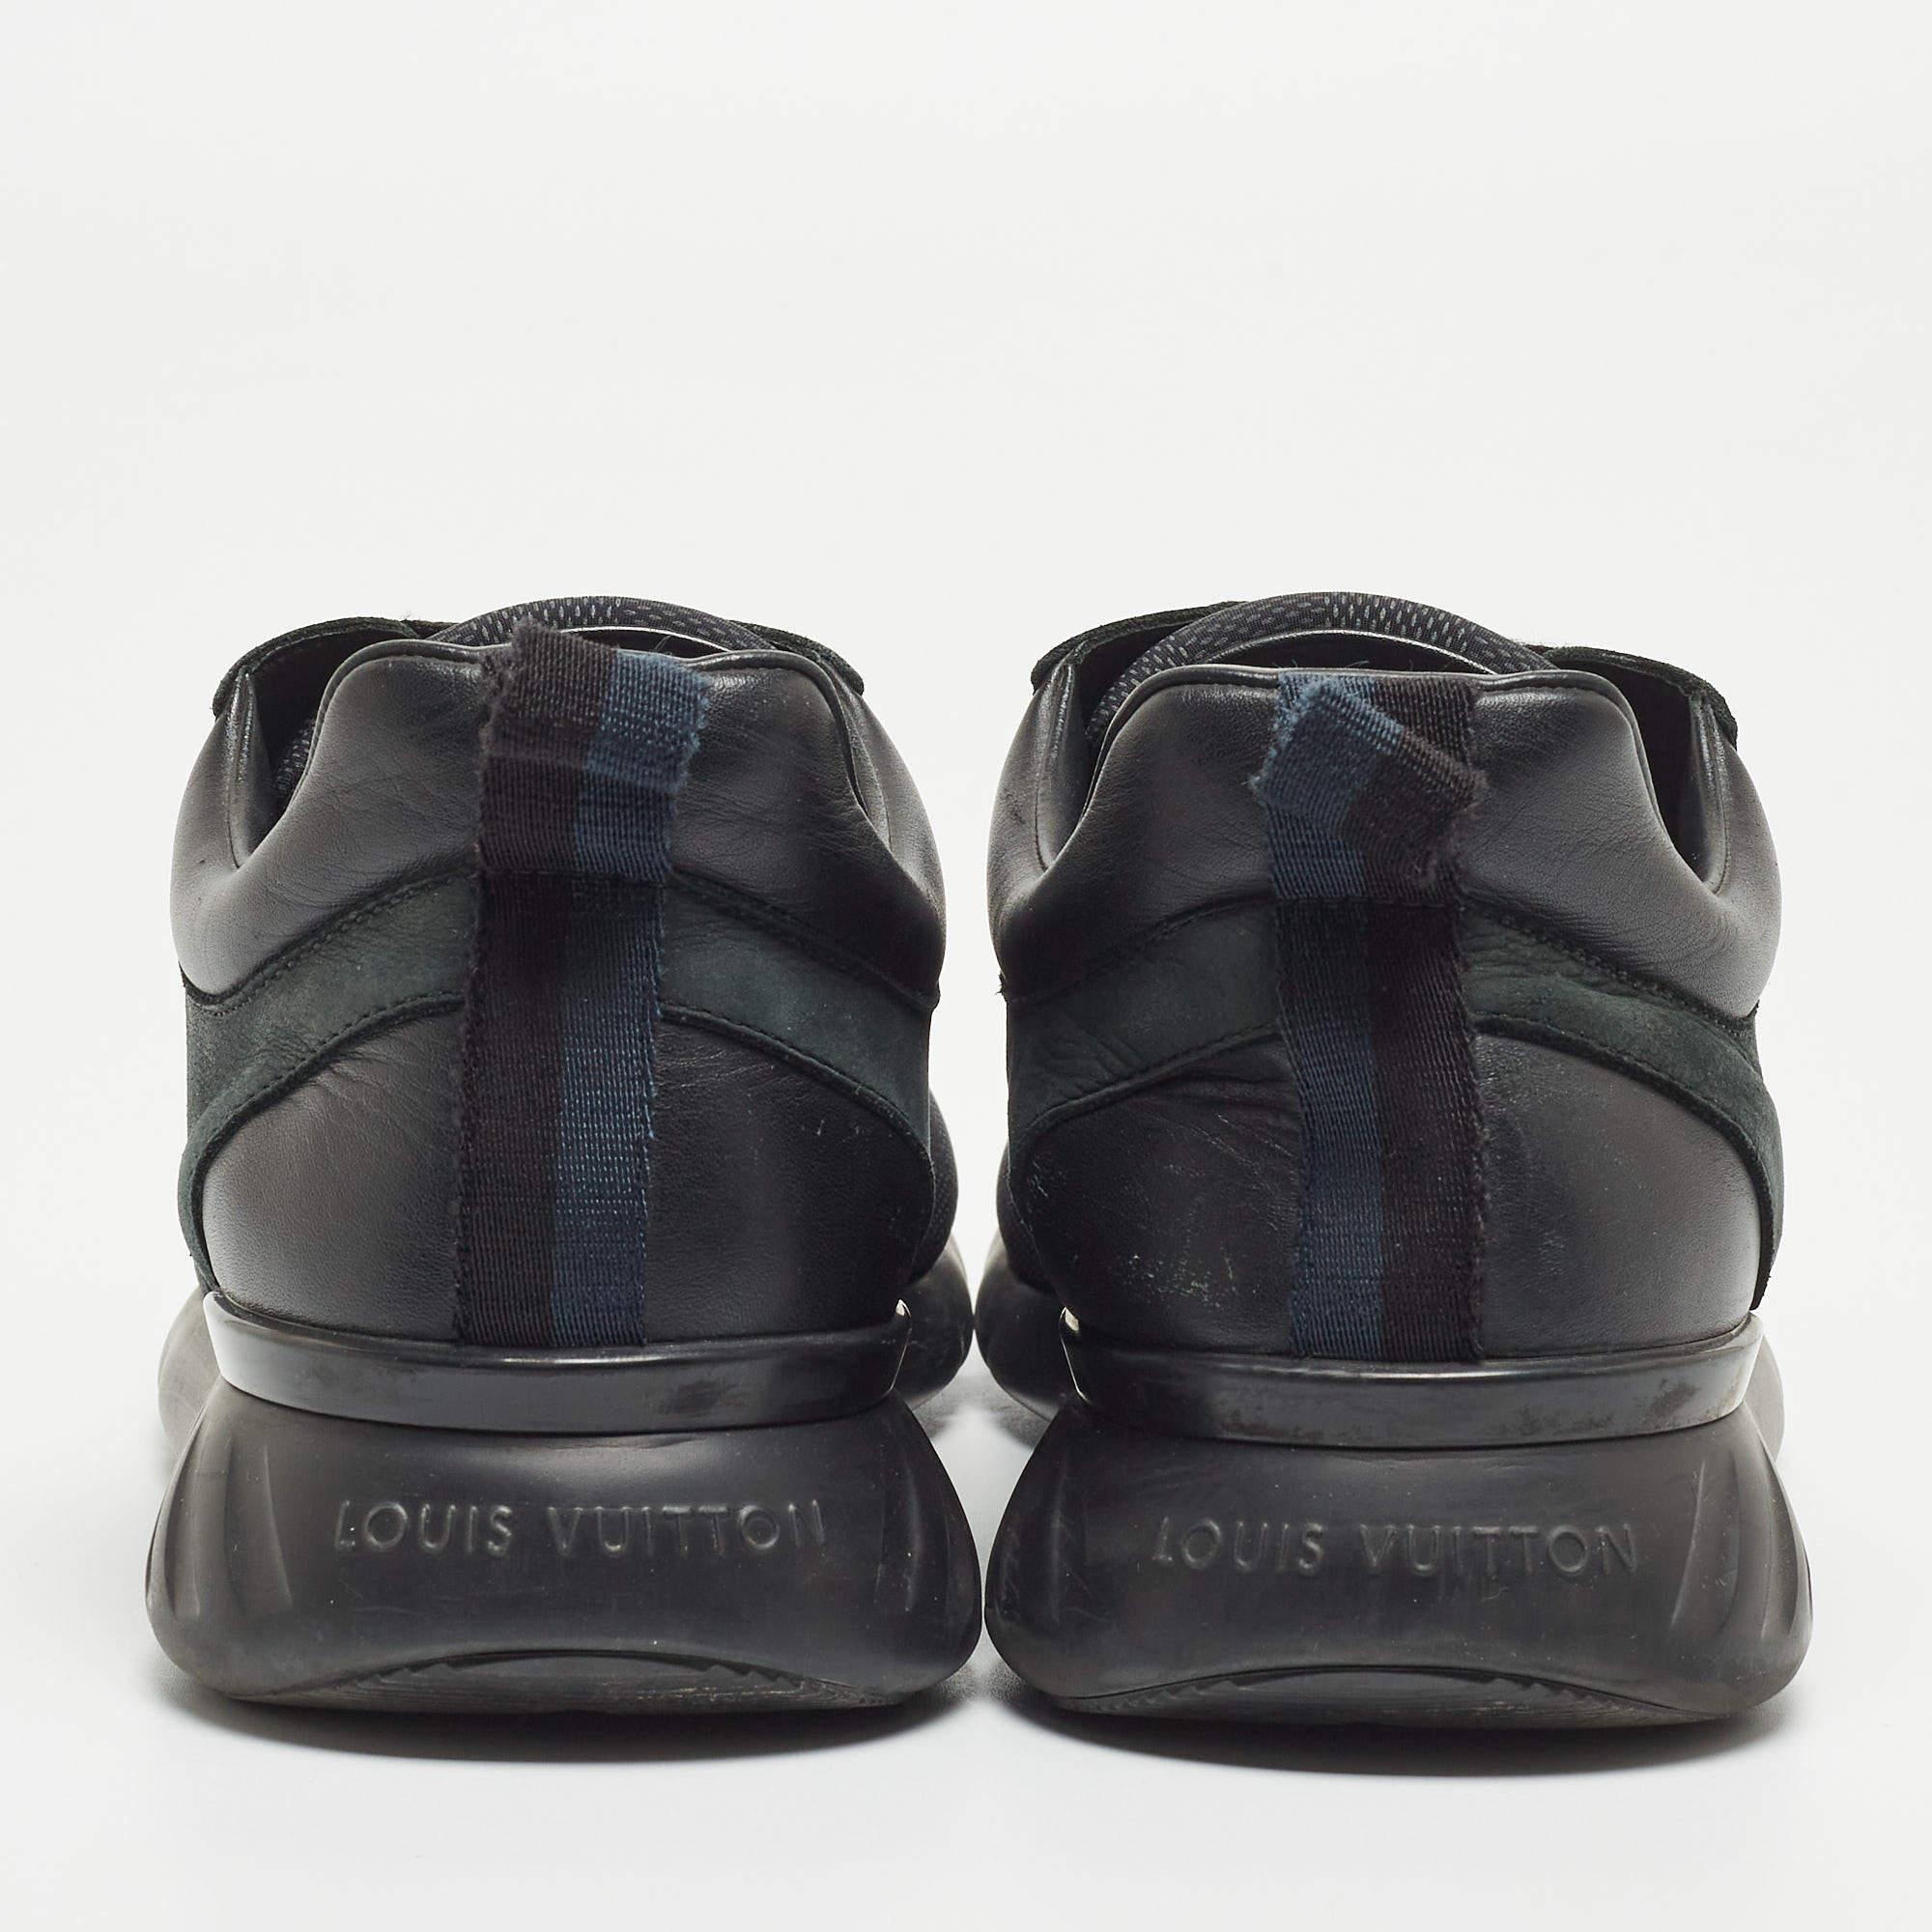 Louis Vuitton Black/Green Leather and Nylon Fastlane Sneakers Size 41 2